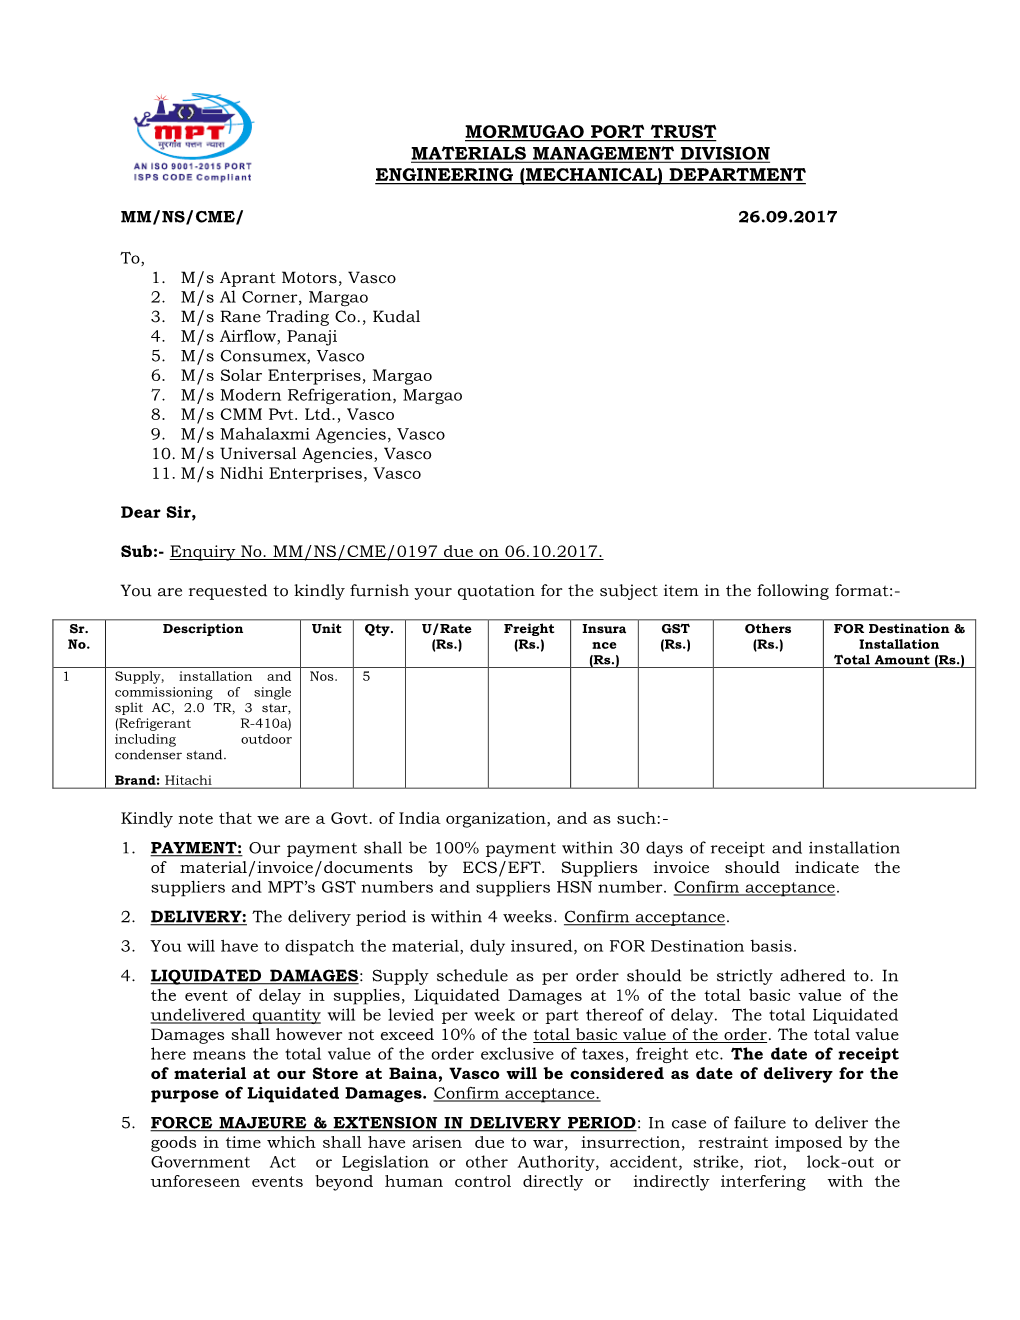 Mormugao Port Trust Materials Management Division Engineering (Mechanical) Department